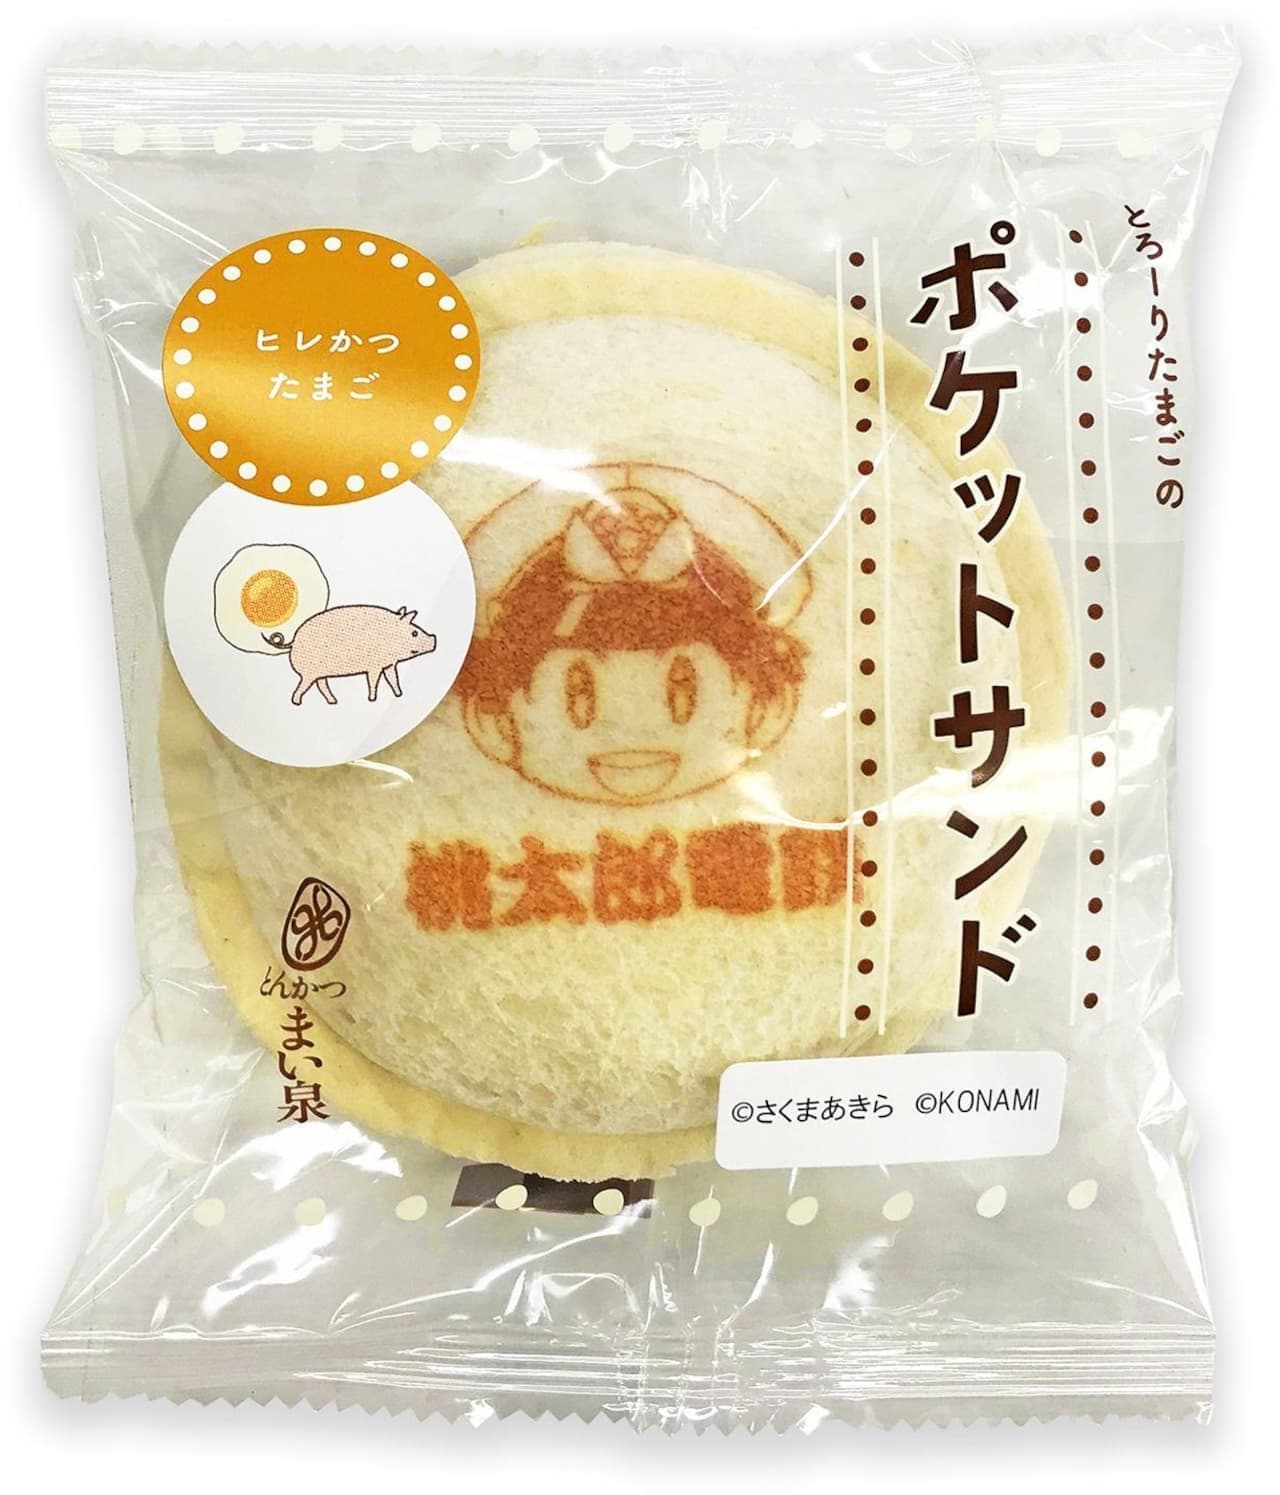 Collaboration with Maisen "Momotaro Dentetsu-Showa Heisei Reiwa is also a staple!" Game "Momotaro Dentetsu Pocket Sandwich with Original Illustrations"